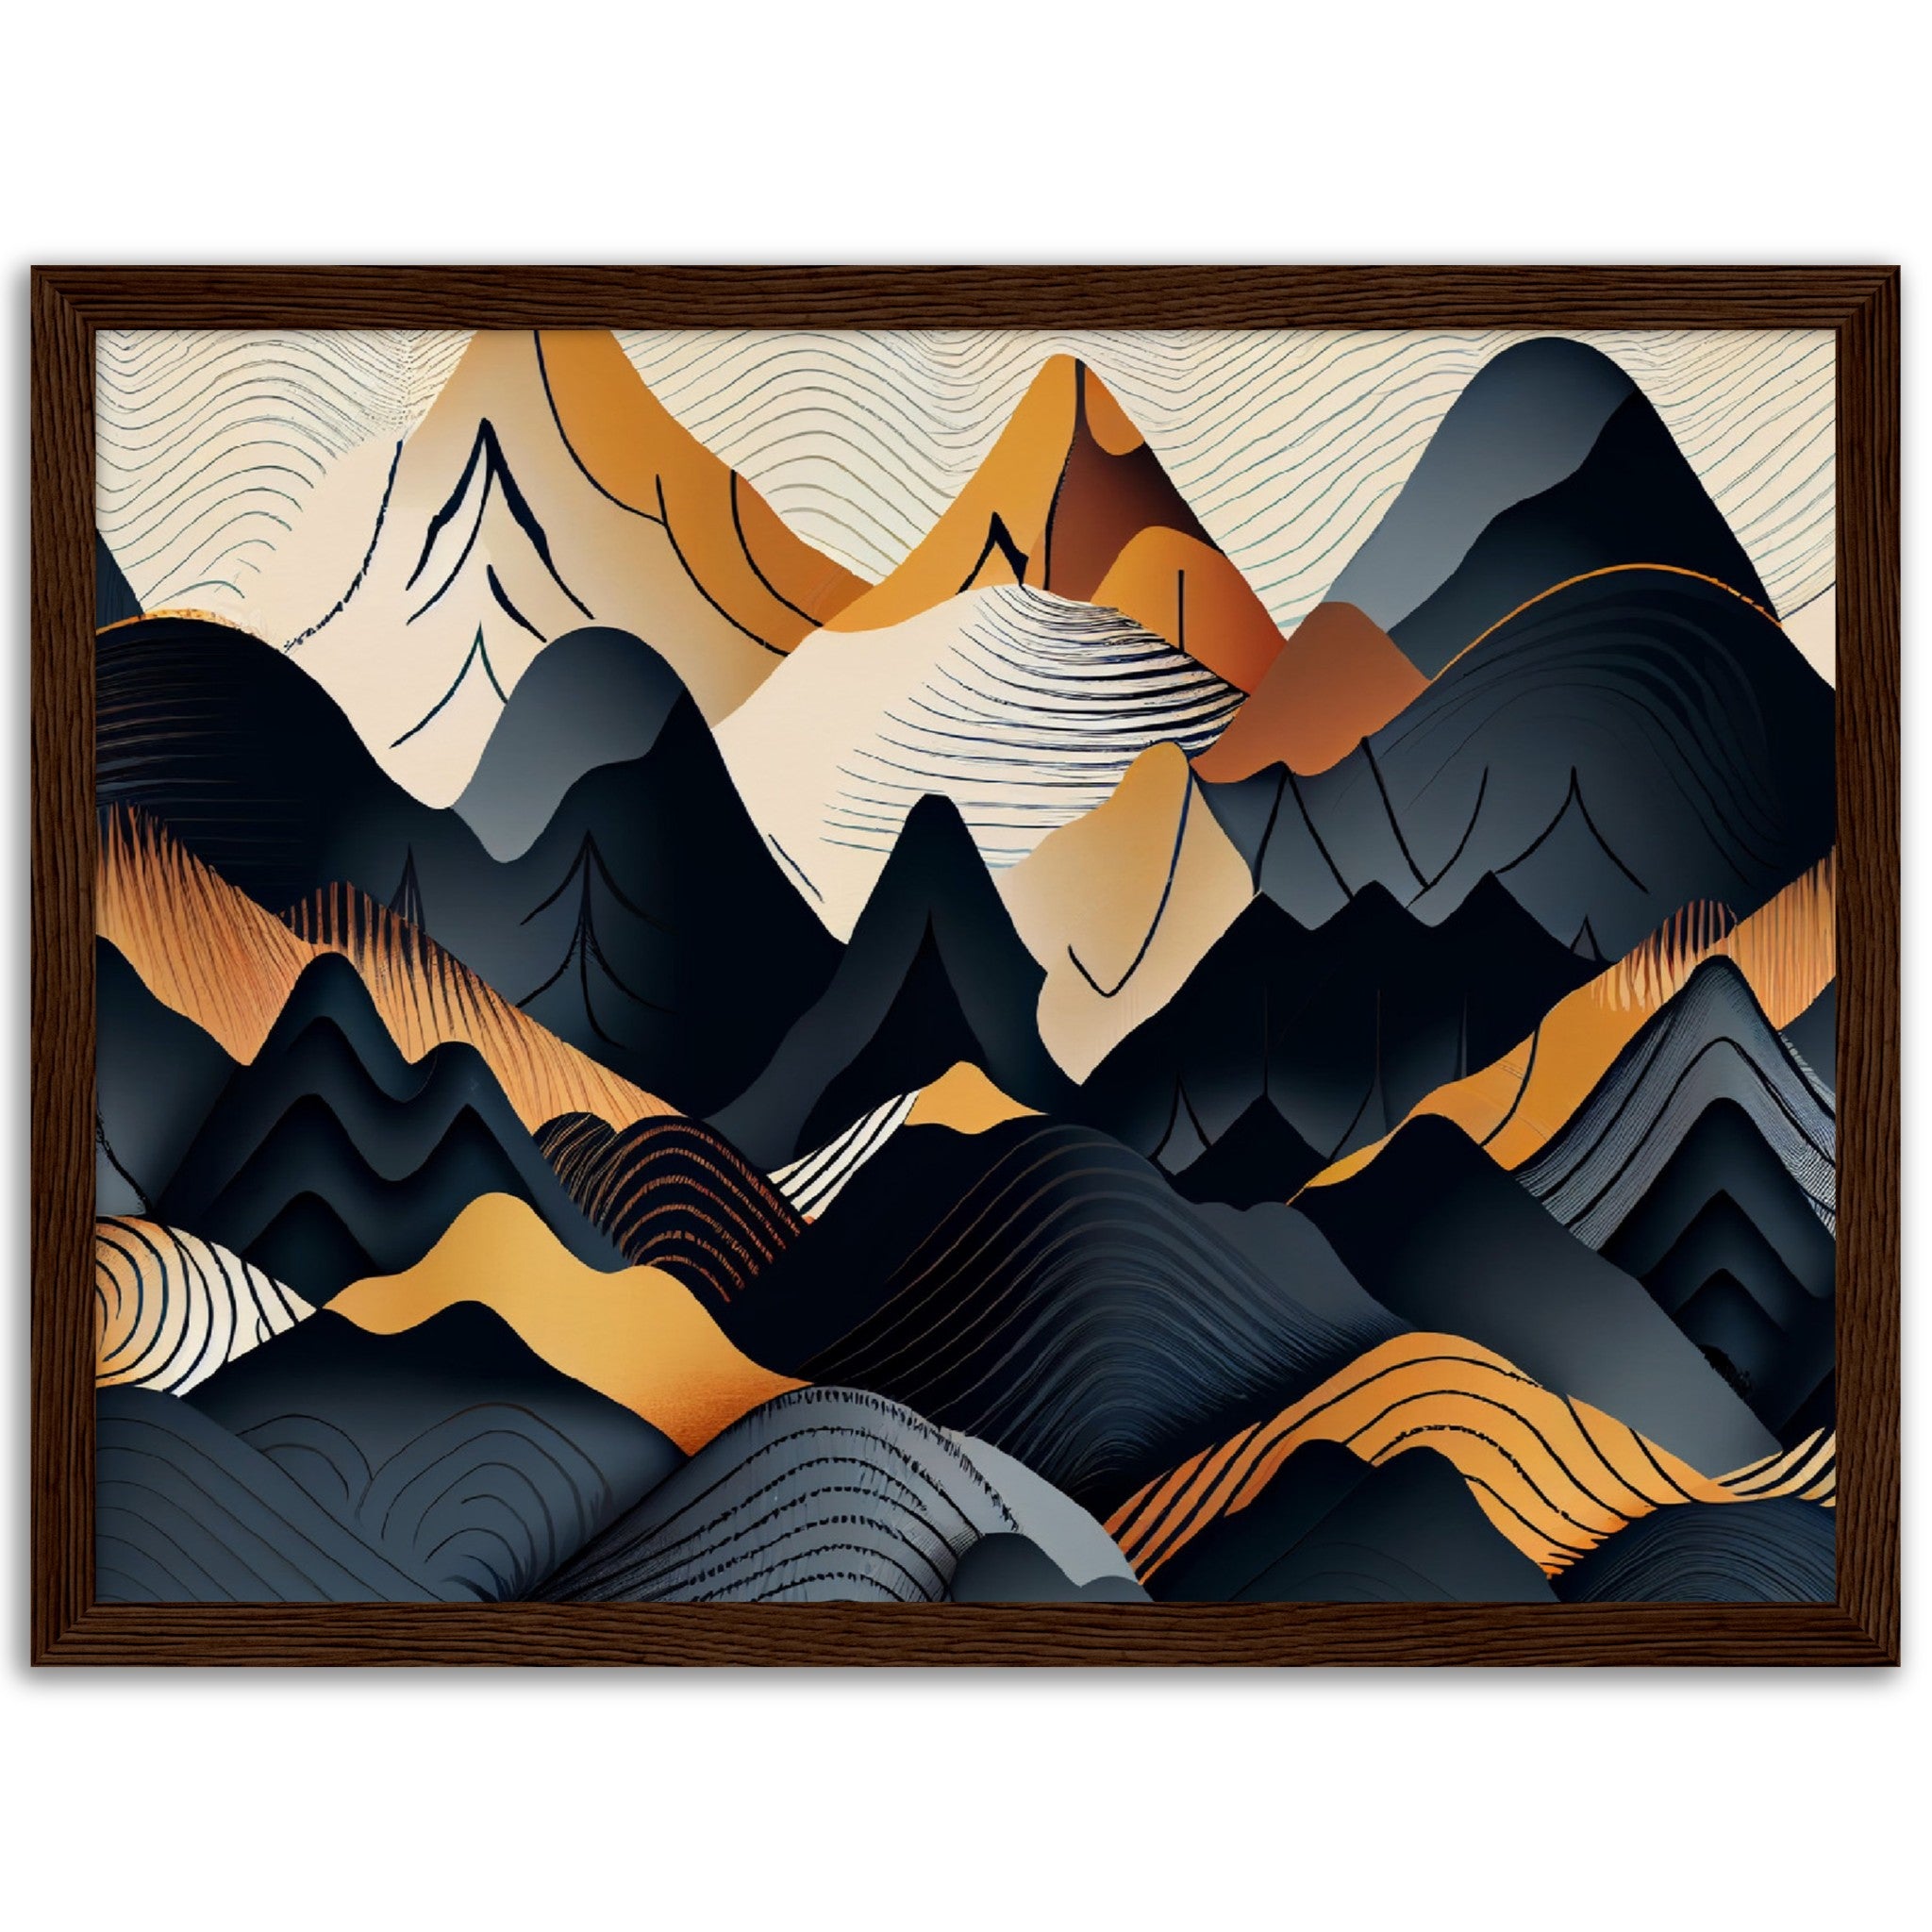 Minimalist Landscape Two Gold Peaks - immersiarts